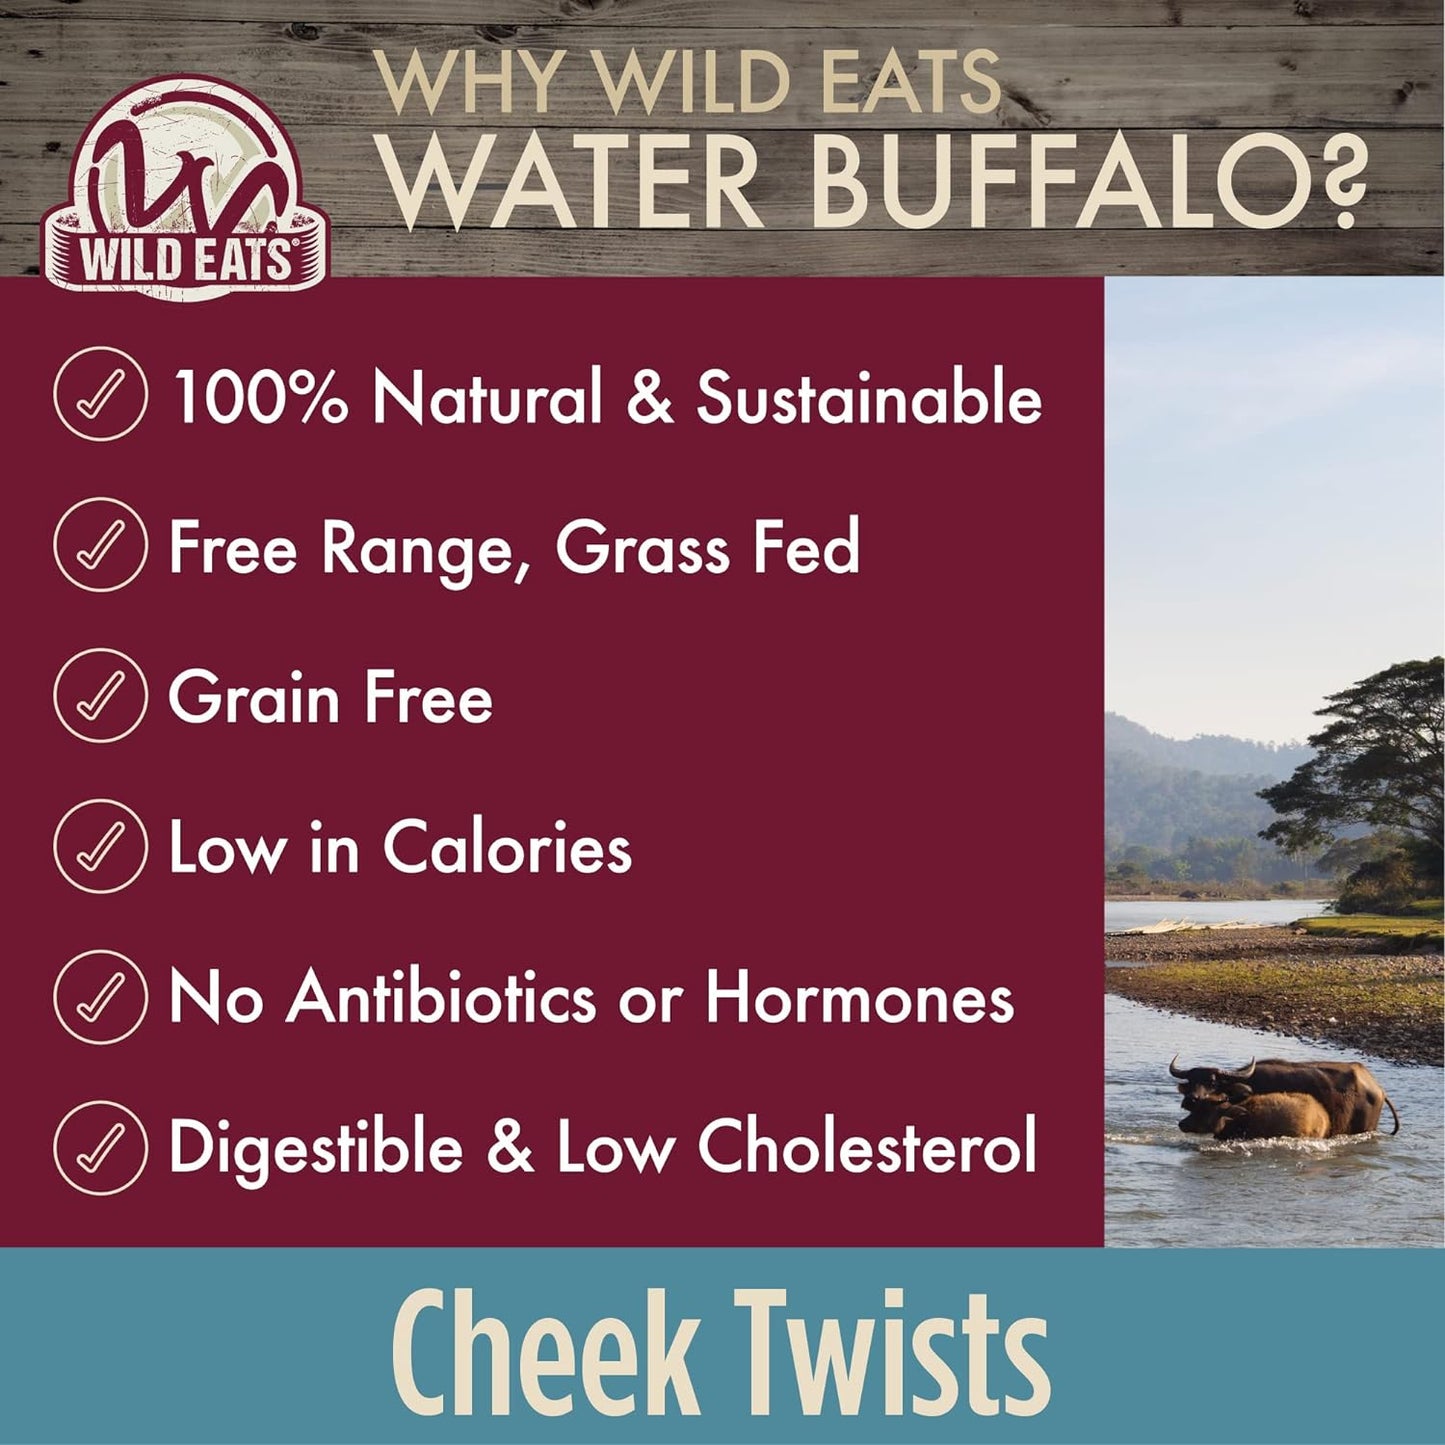 Wild Eats Water Buffalo 8-9-Inch Jerky Wrapped Twisted Cheek, Dog Chew